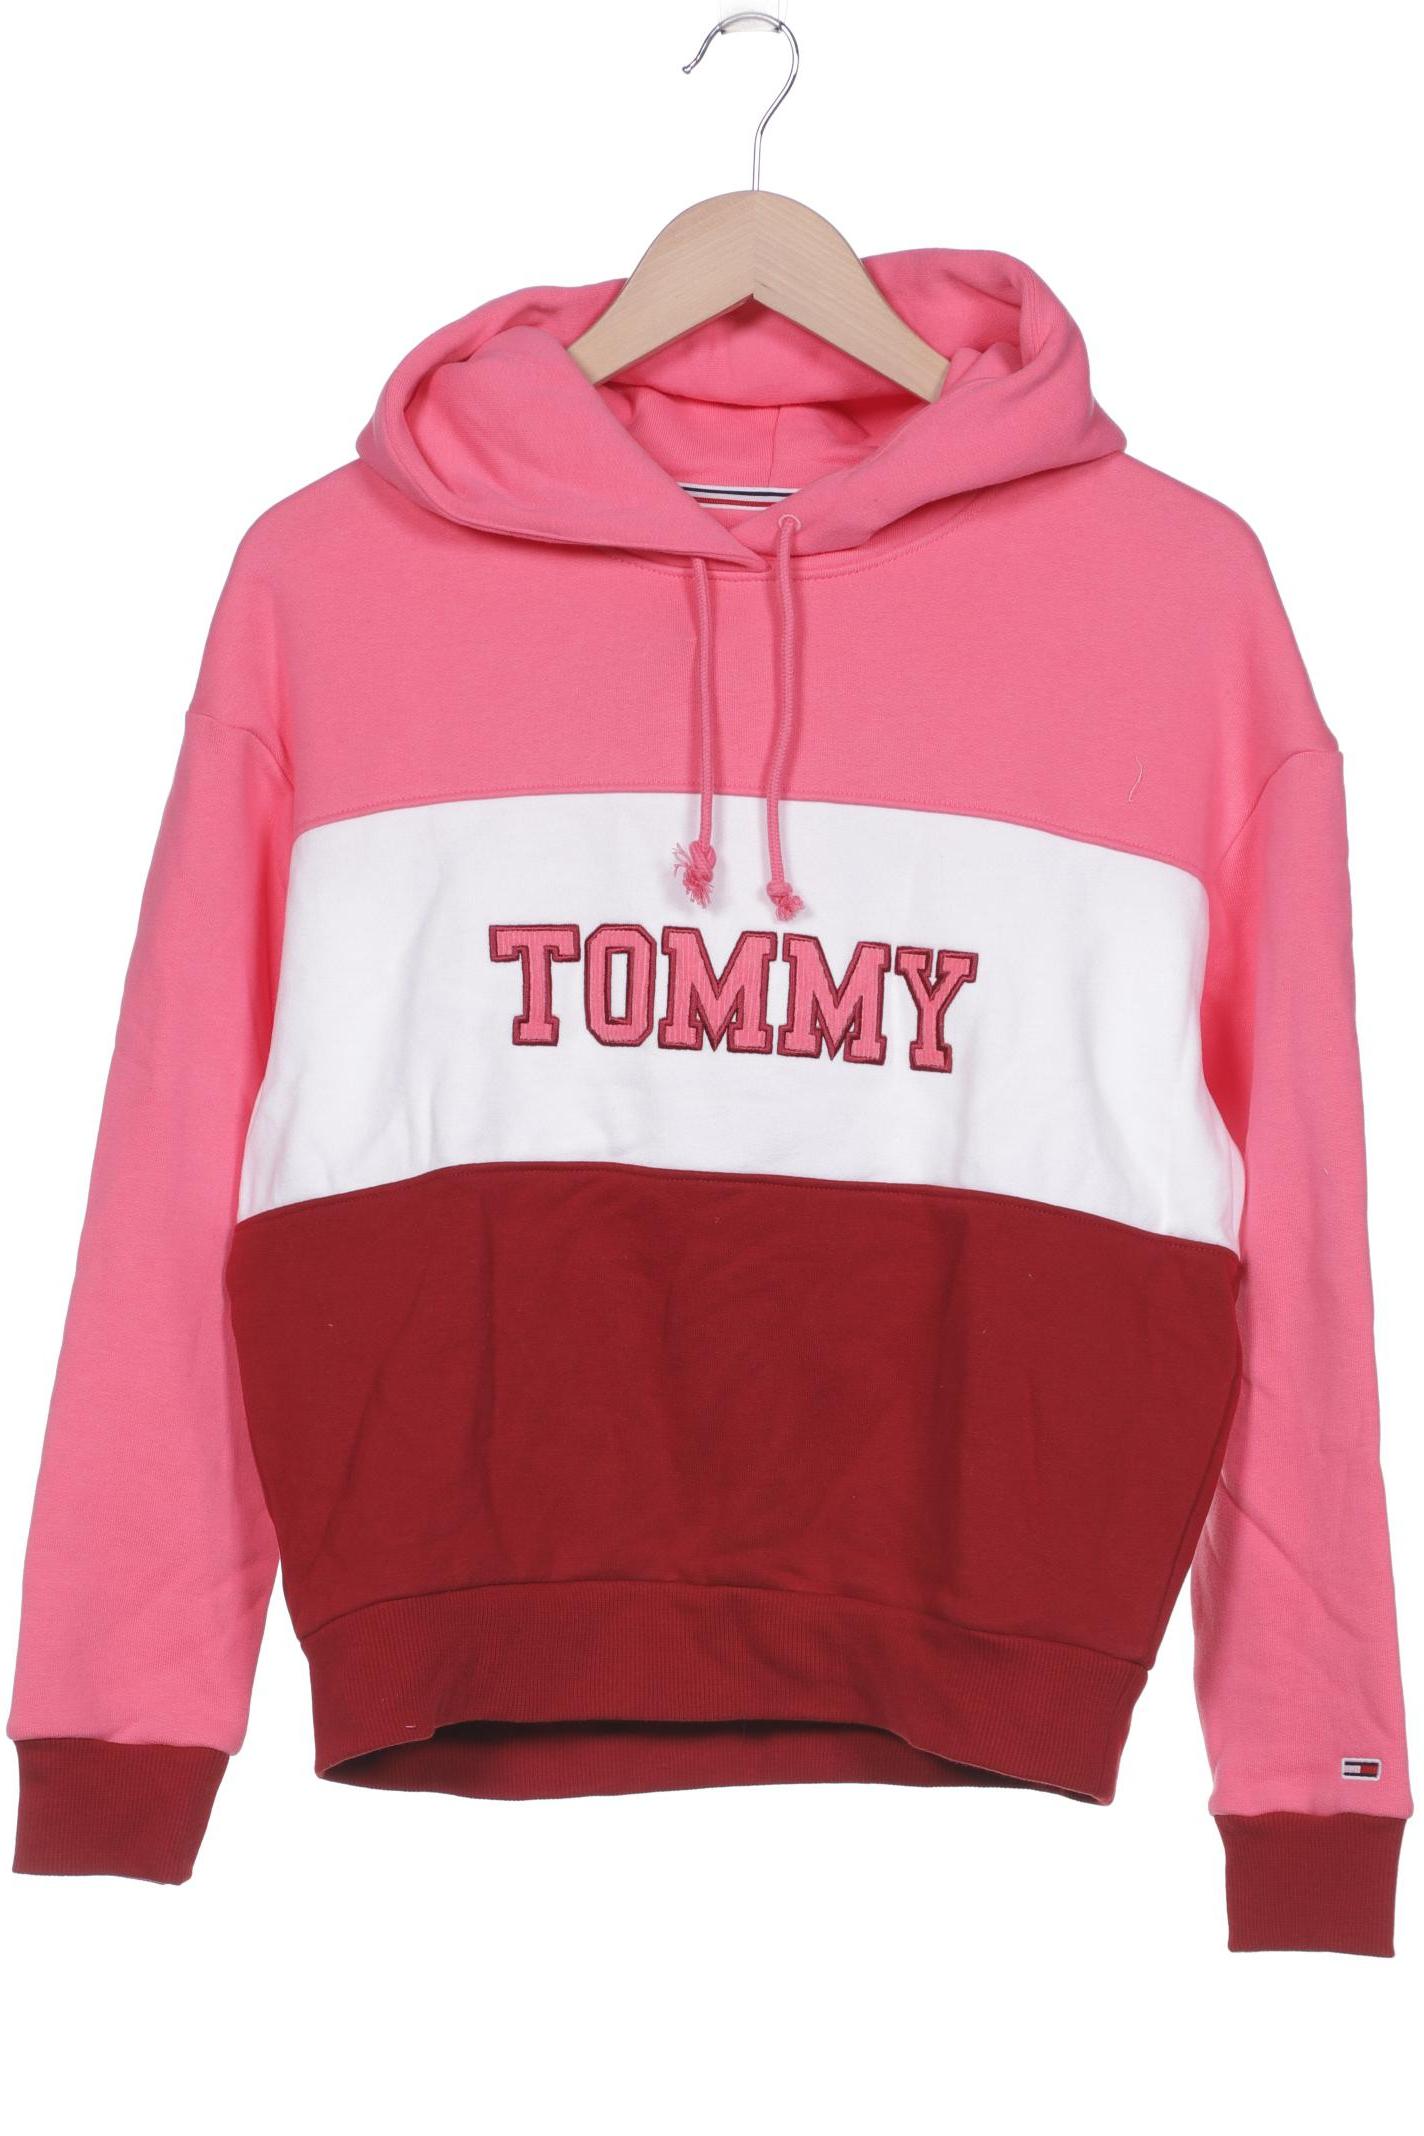 Tommy Jeans Damen Kapuzenpullover, pink von Tommy Jeans